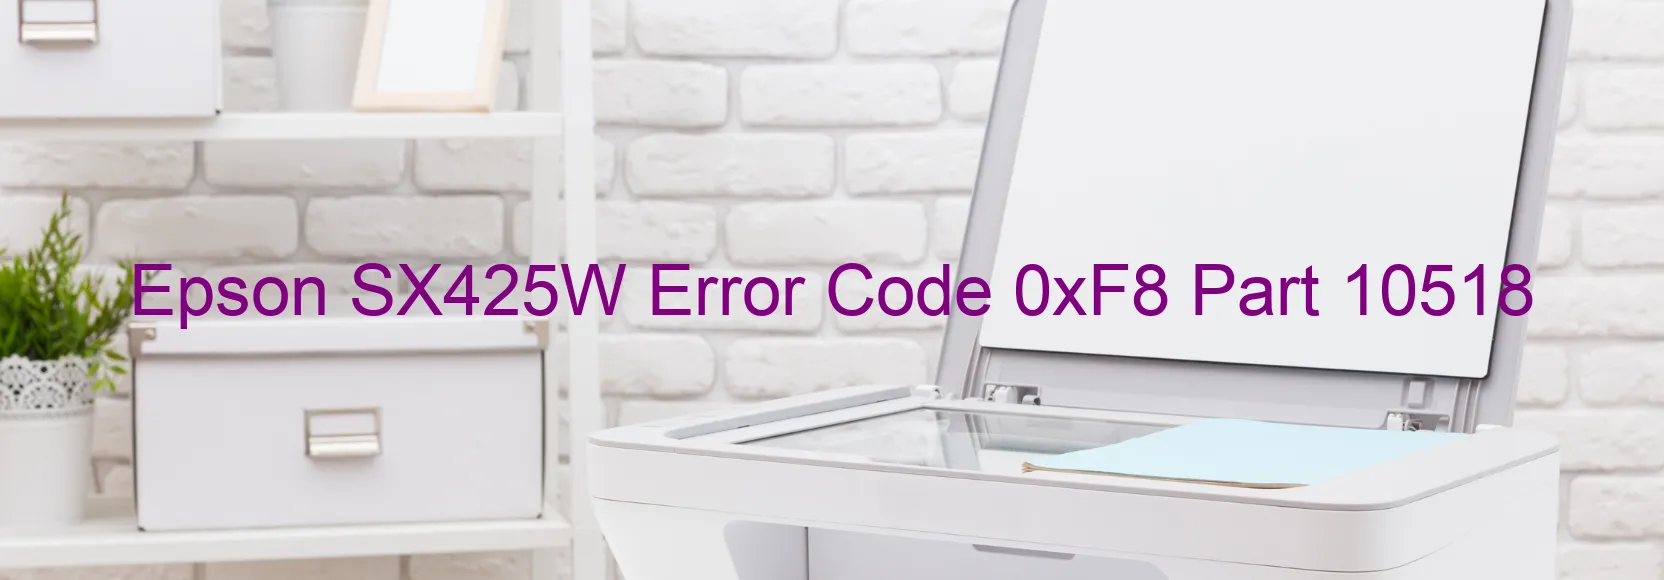 Epson SX425W Error Code 0xF8 Part 10518